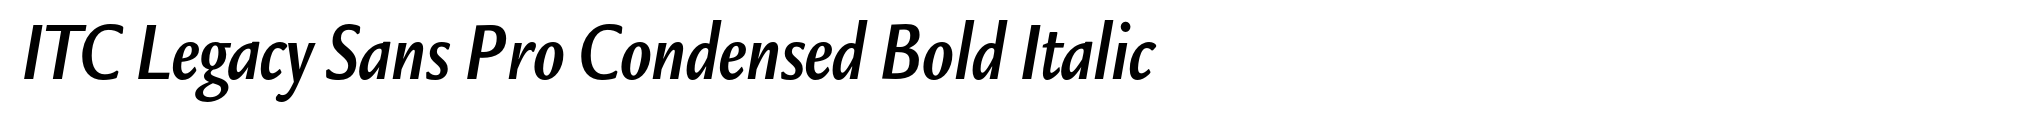 ITC Legacy Sans Pro Condensed Bold Italic image